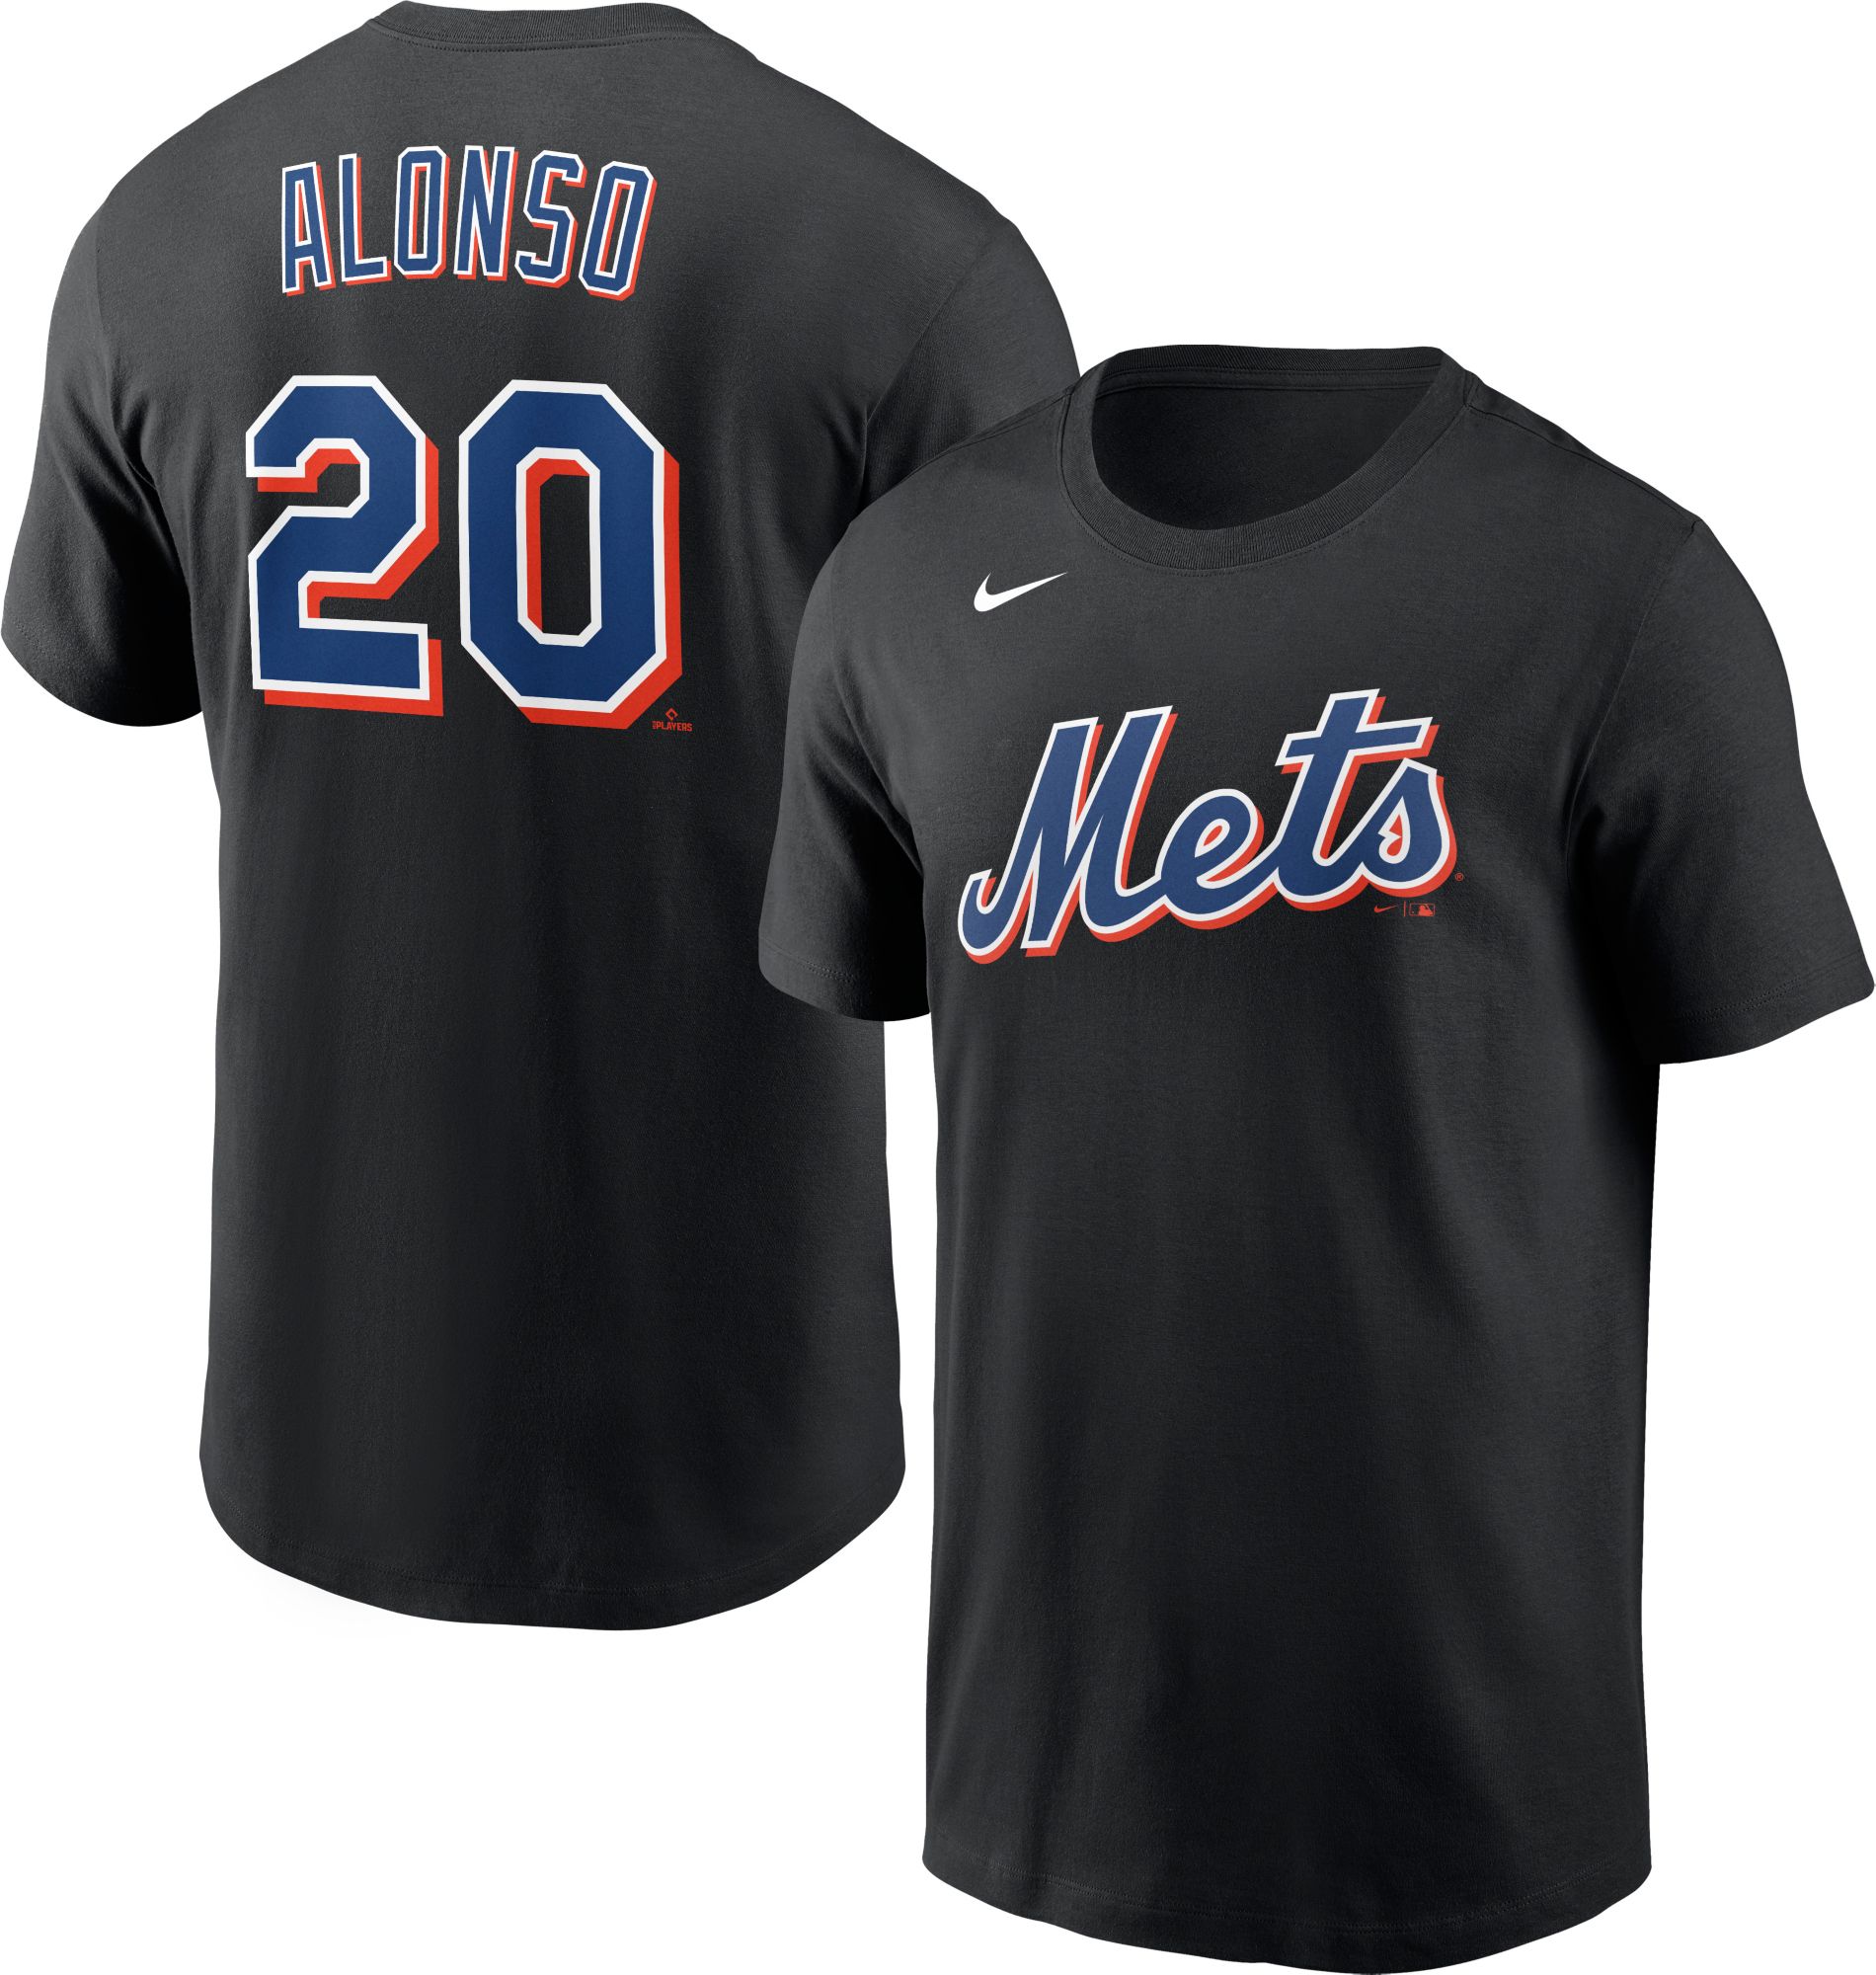 Nike / Men's New York Mets Pete Alonso #20 Black T-Shirt